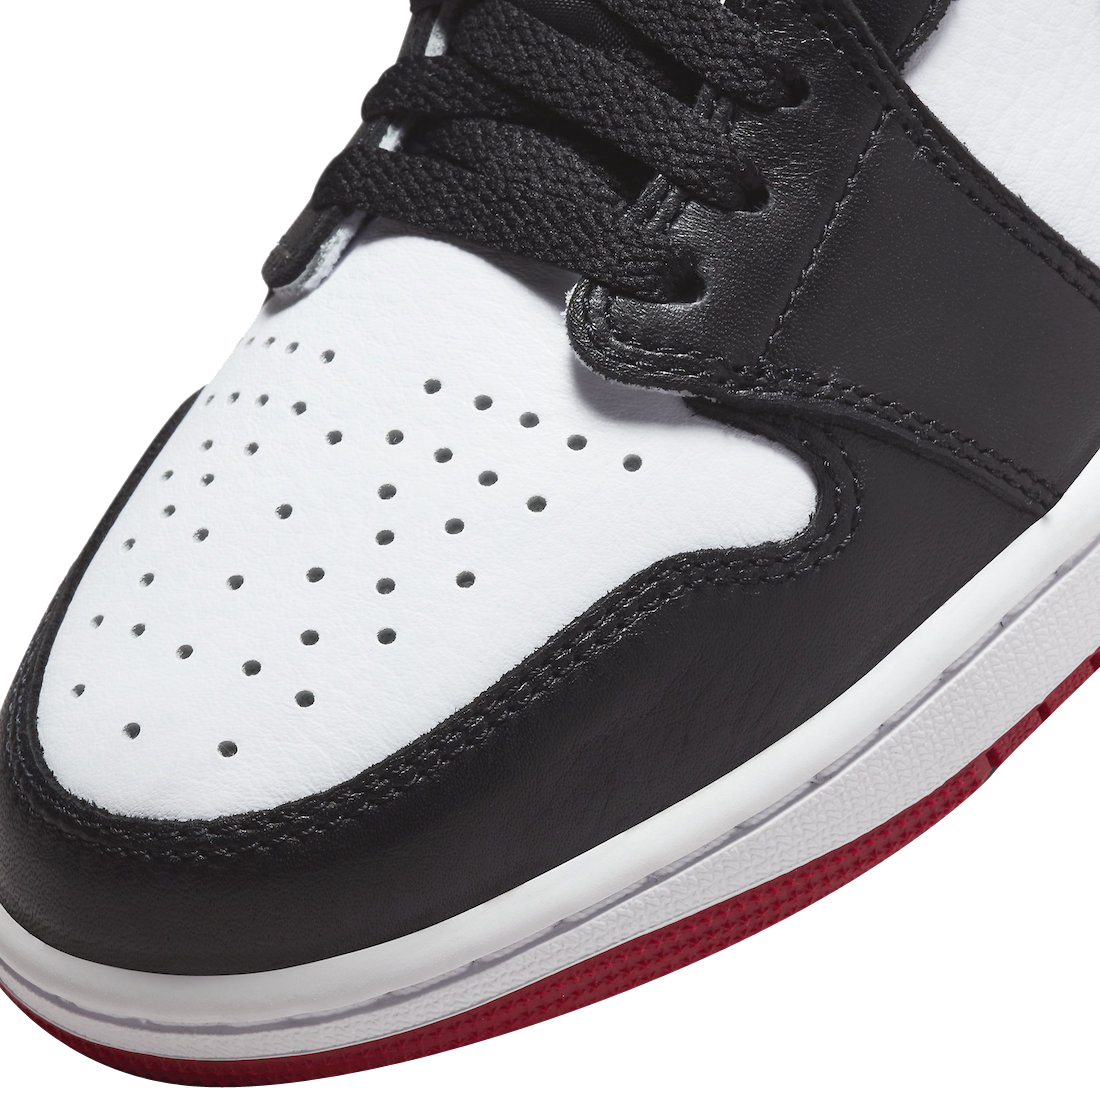 Air Jordan 1 Low OG Black Toe CZ0790-106 - KicksOnFire.com